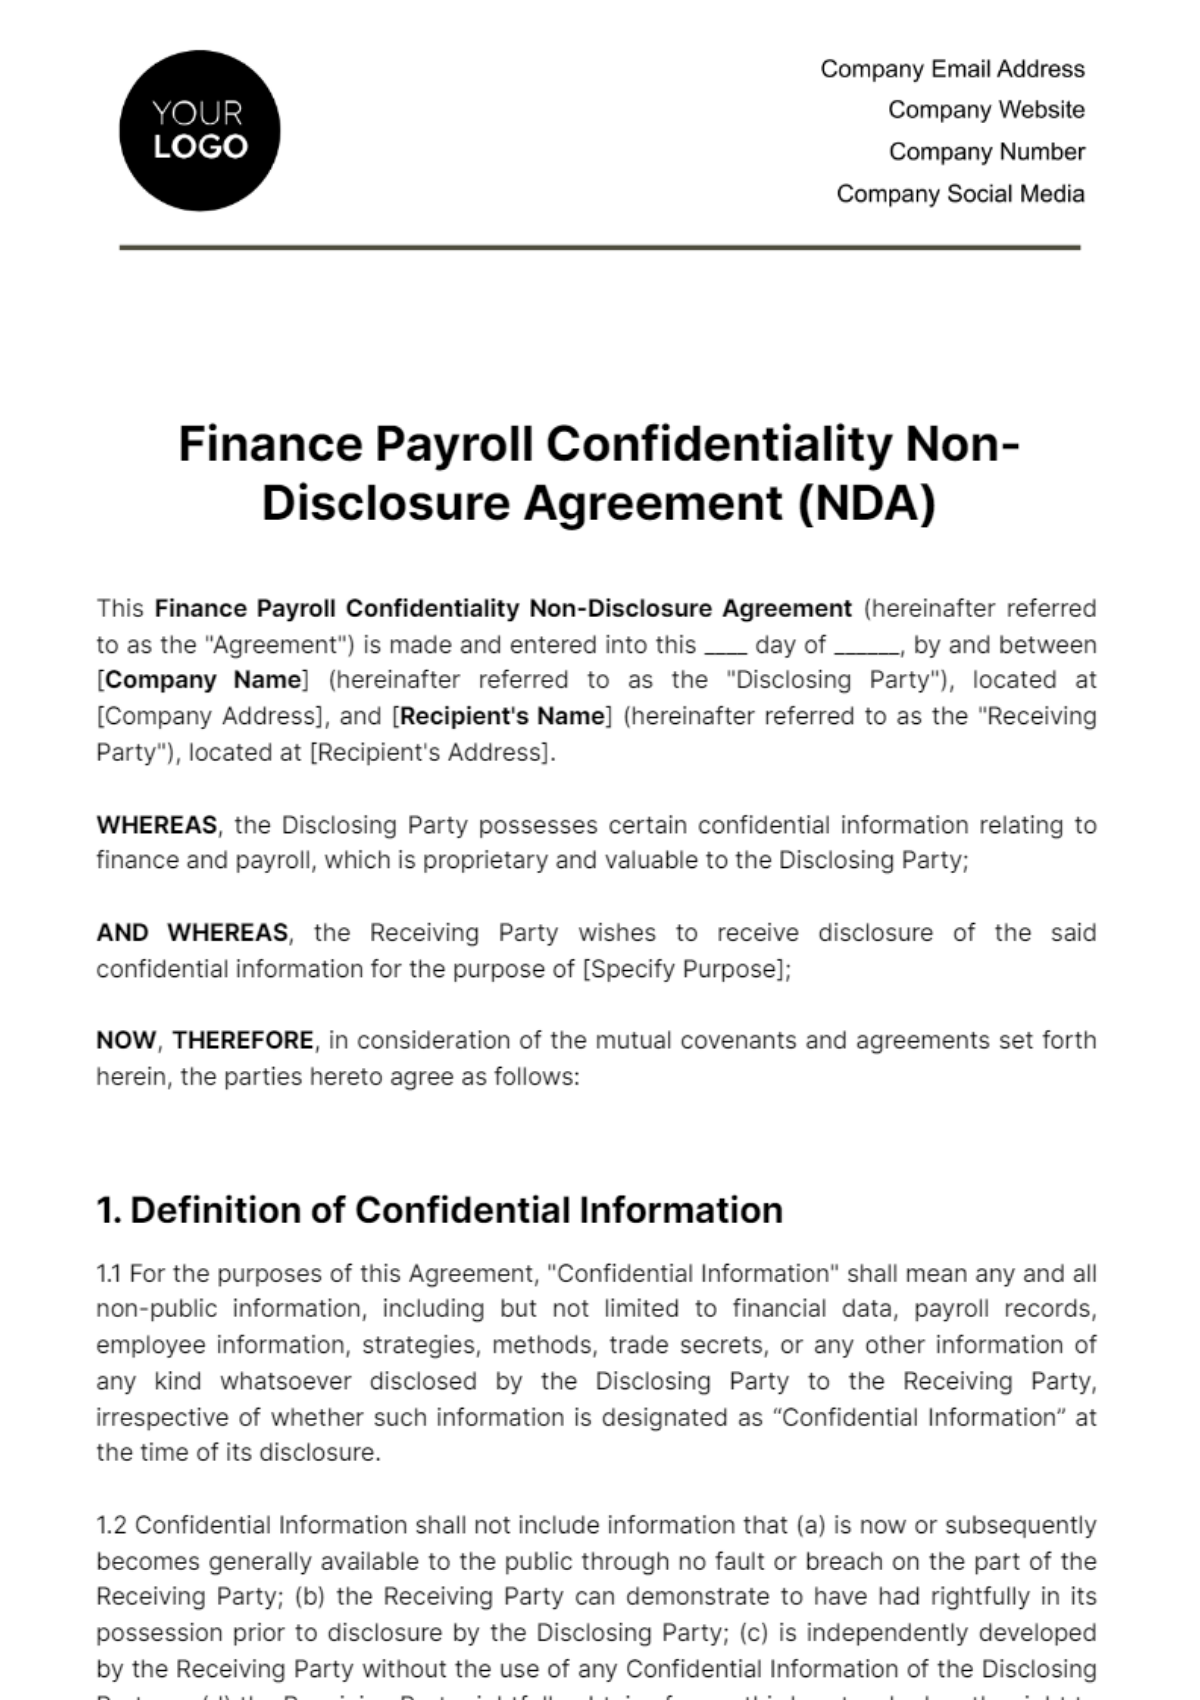 Free Finance Payroll Confidentiality NDA Template